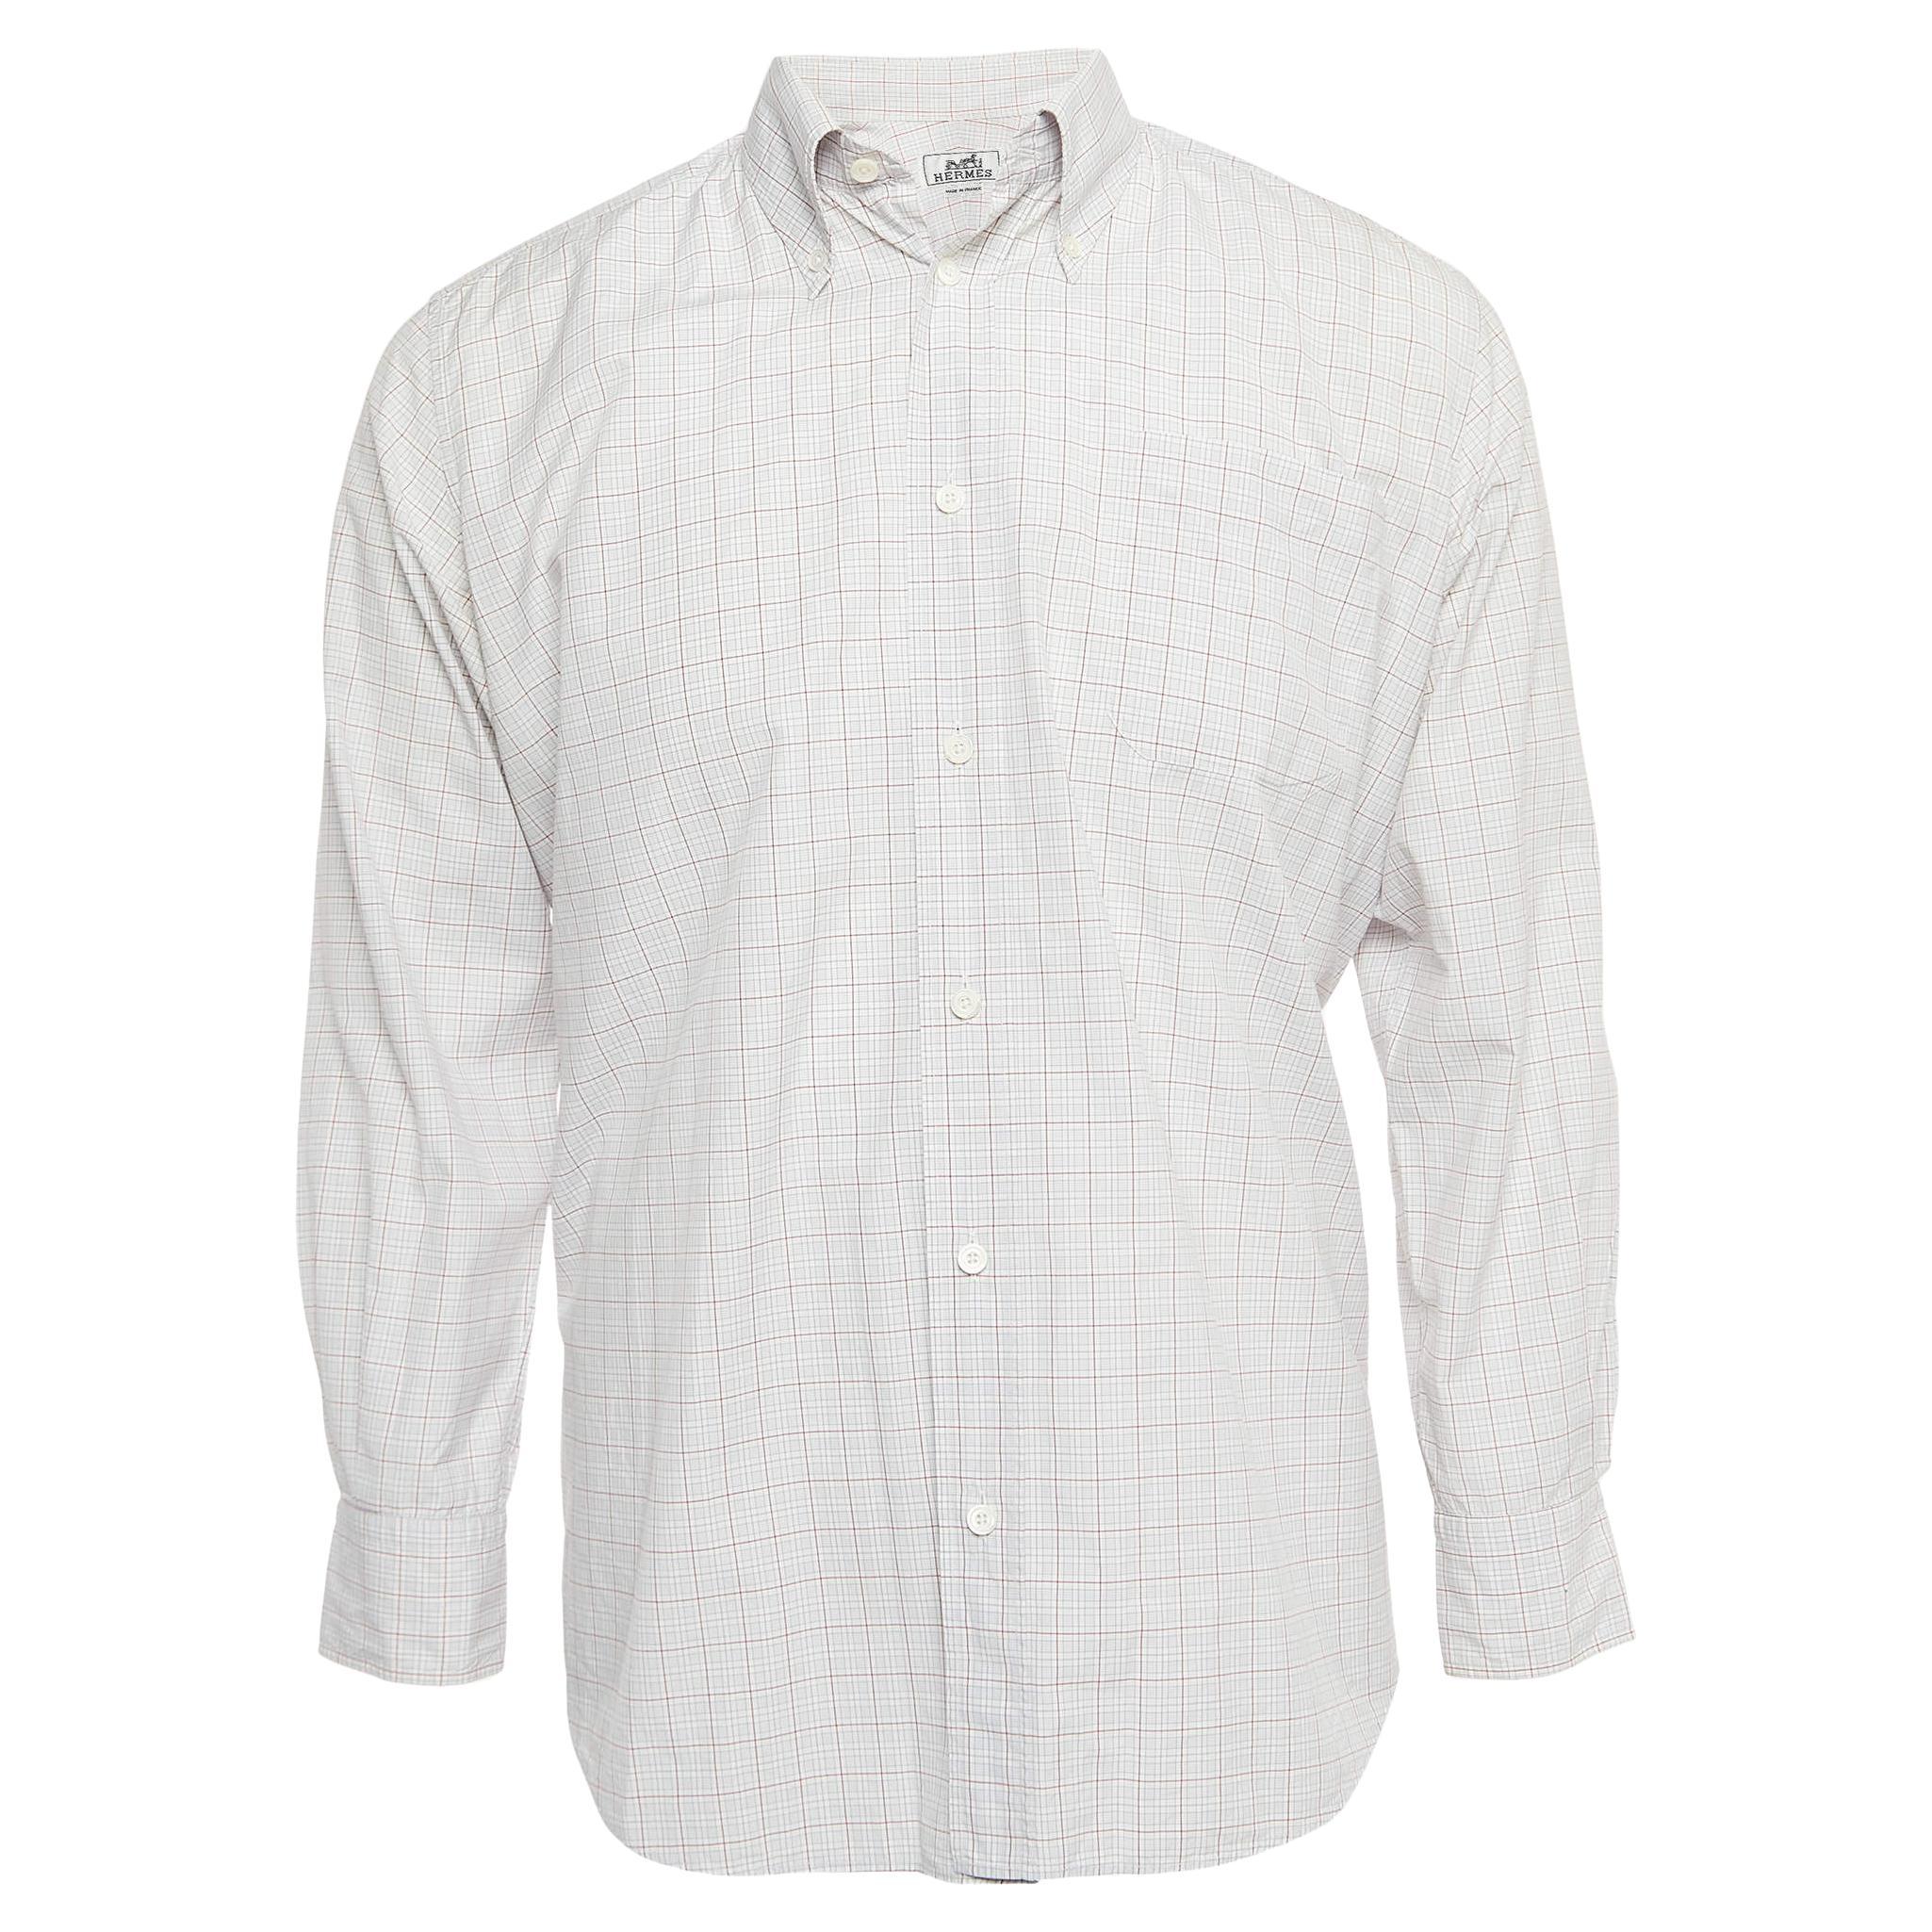 Hermes White Plaid Cotton Button Down Full Sleeve Shirt L